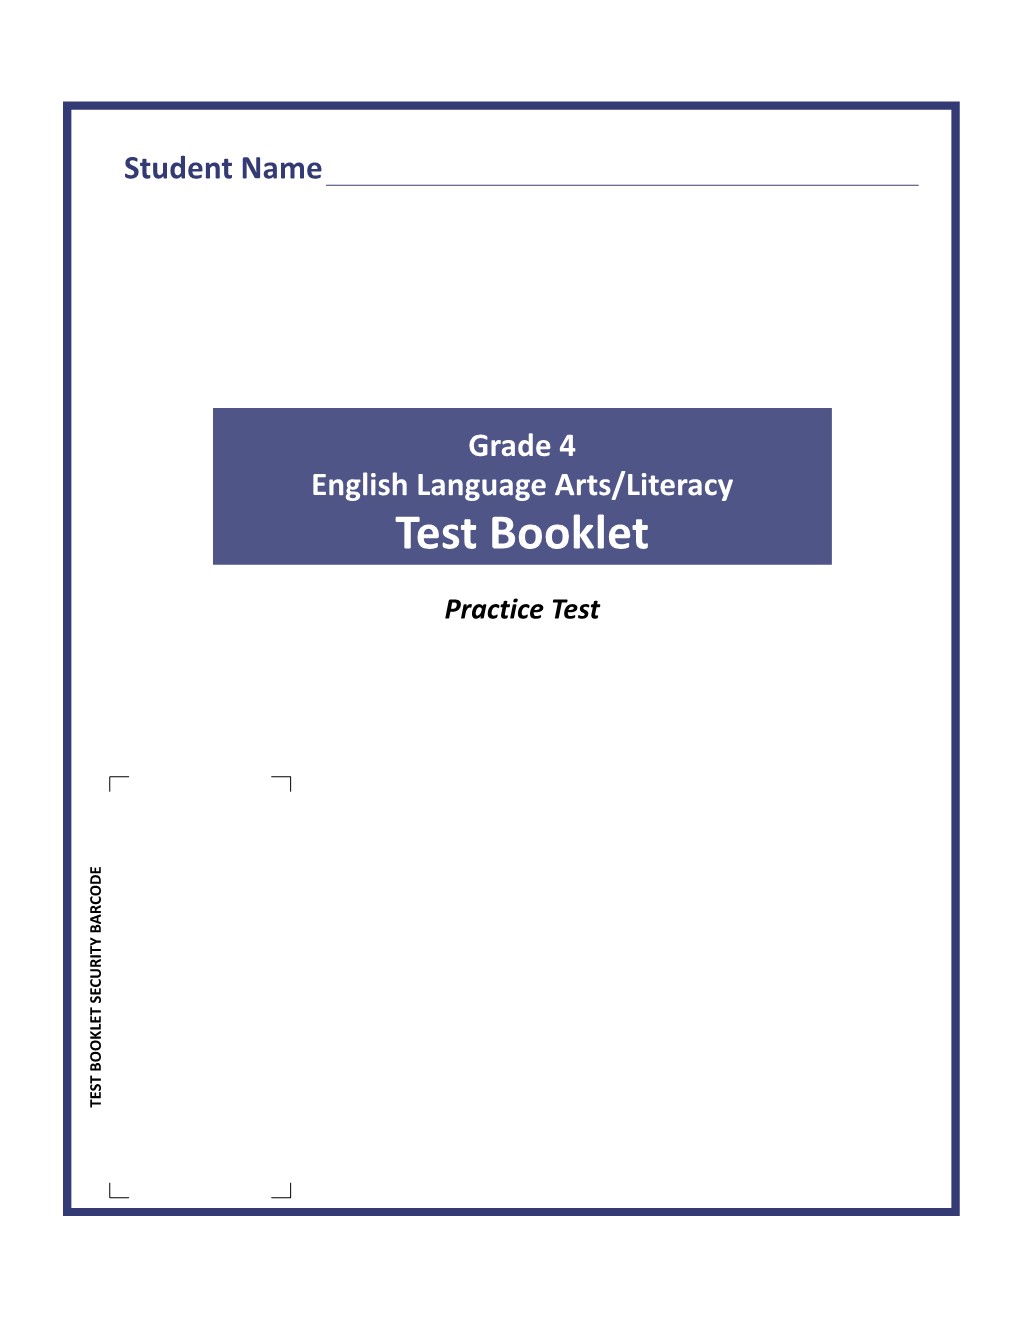 Paper-Based Practice Test Booklet